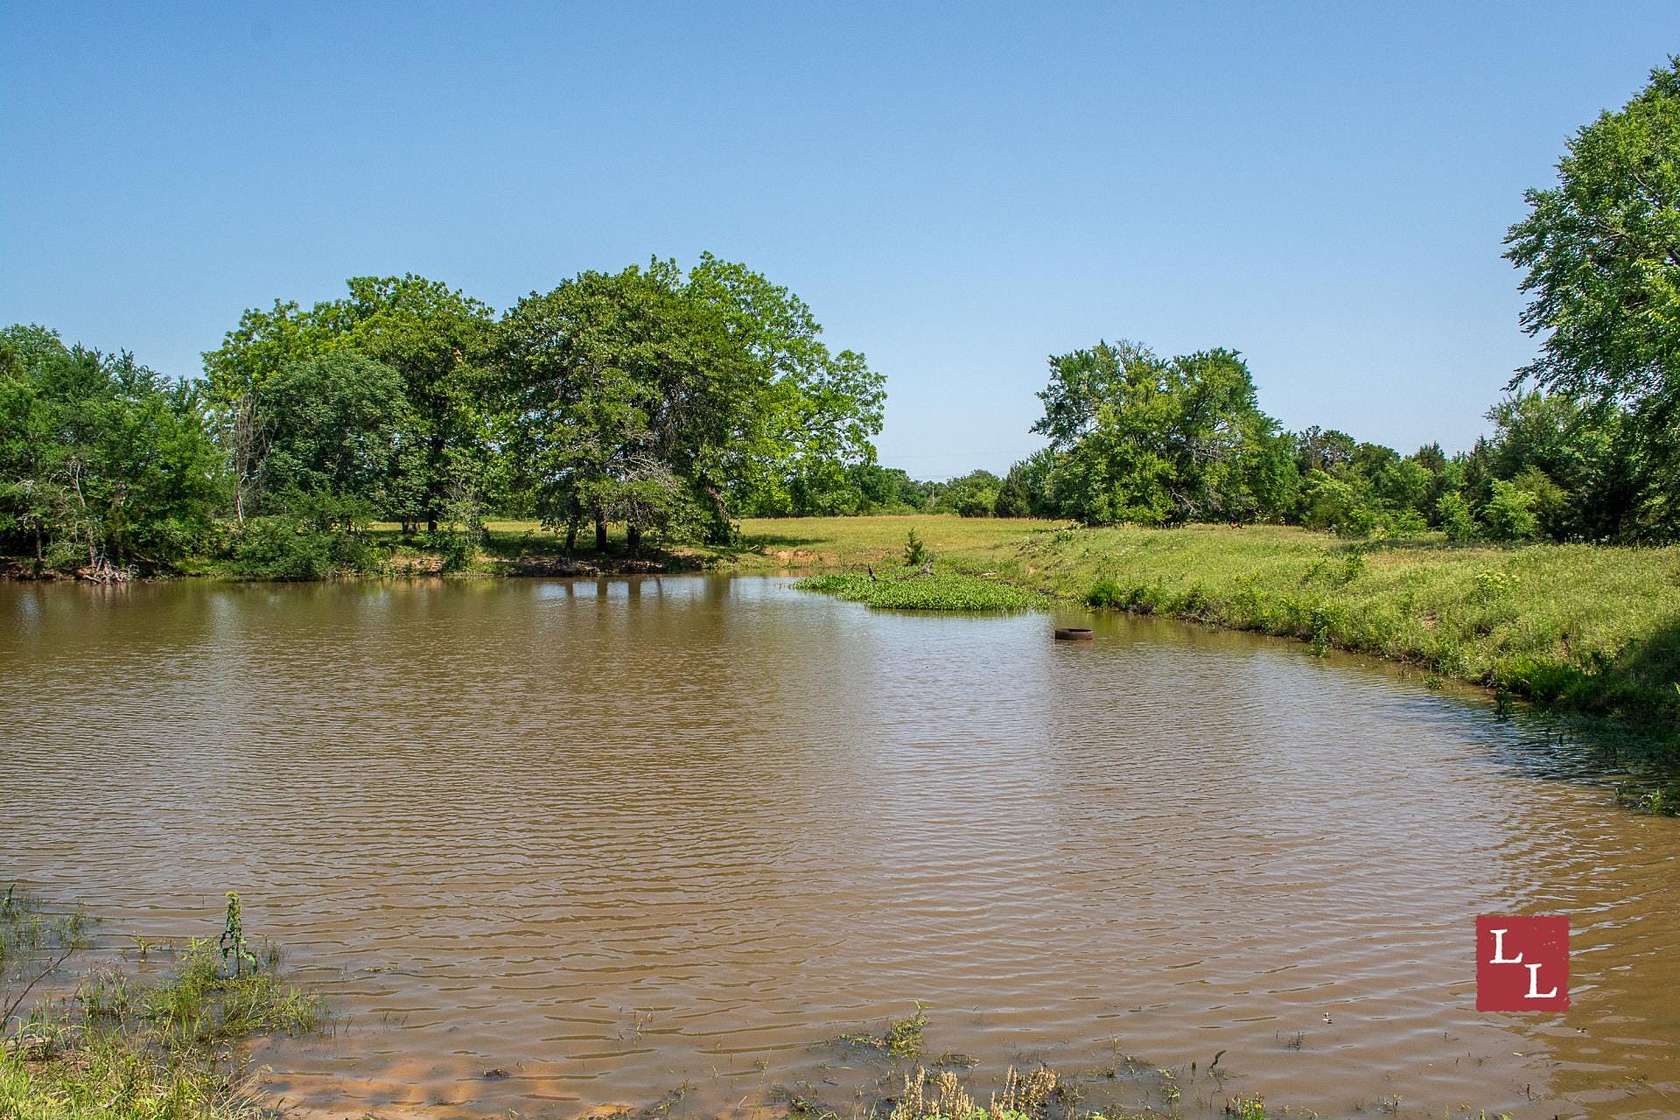 70 Acres of Recreational Land & Farm for Sale in Marietta, Oklahoma